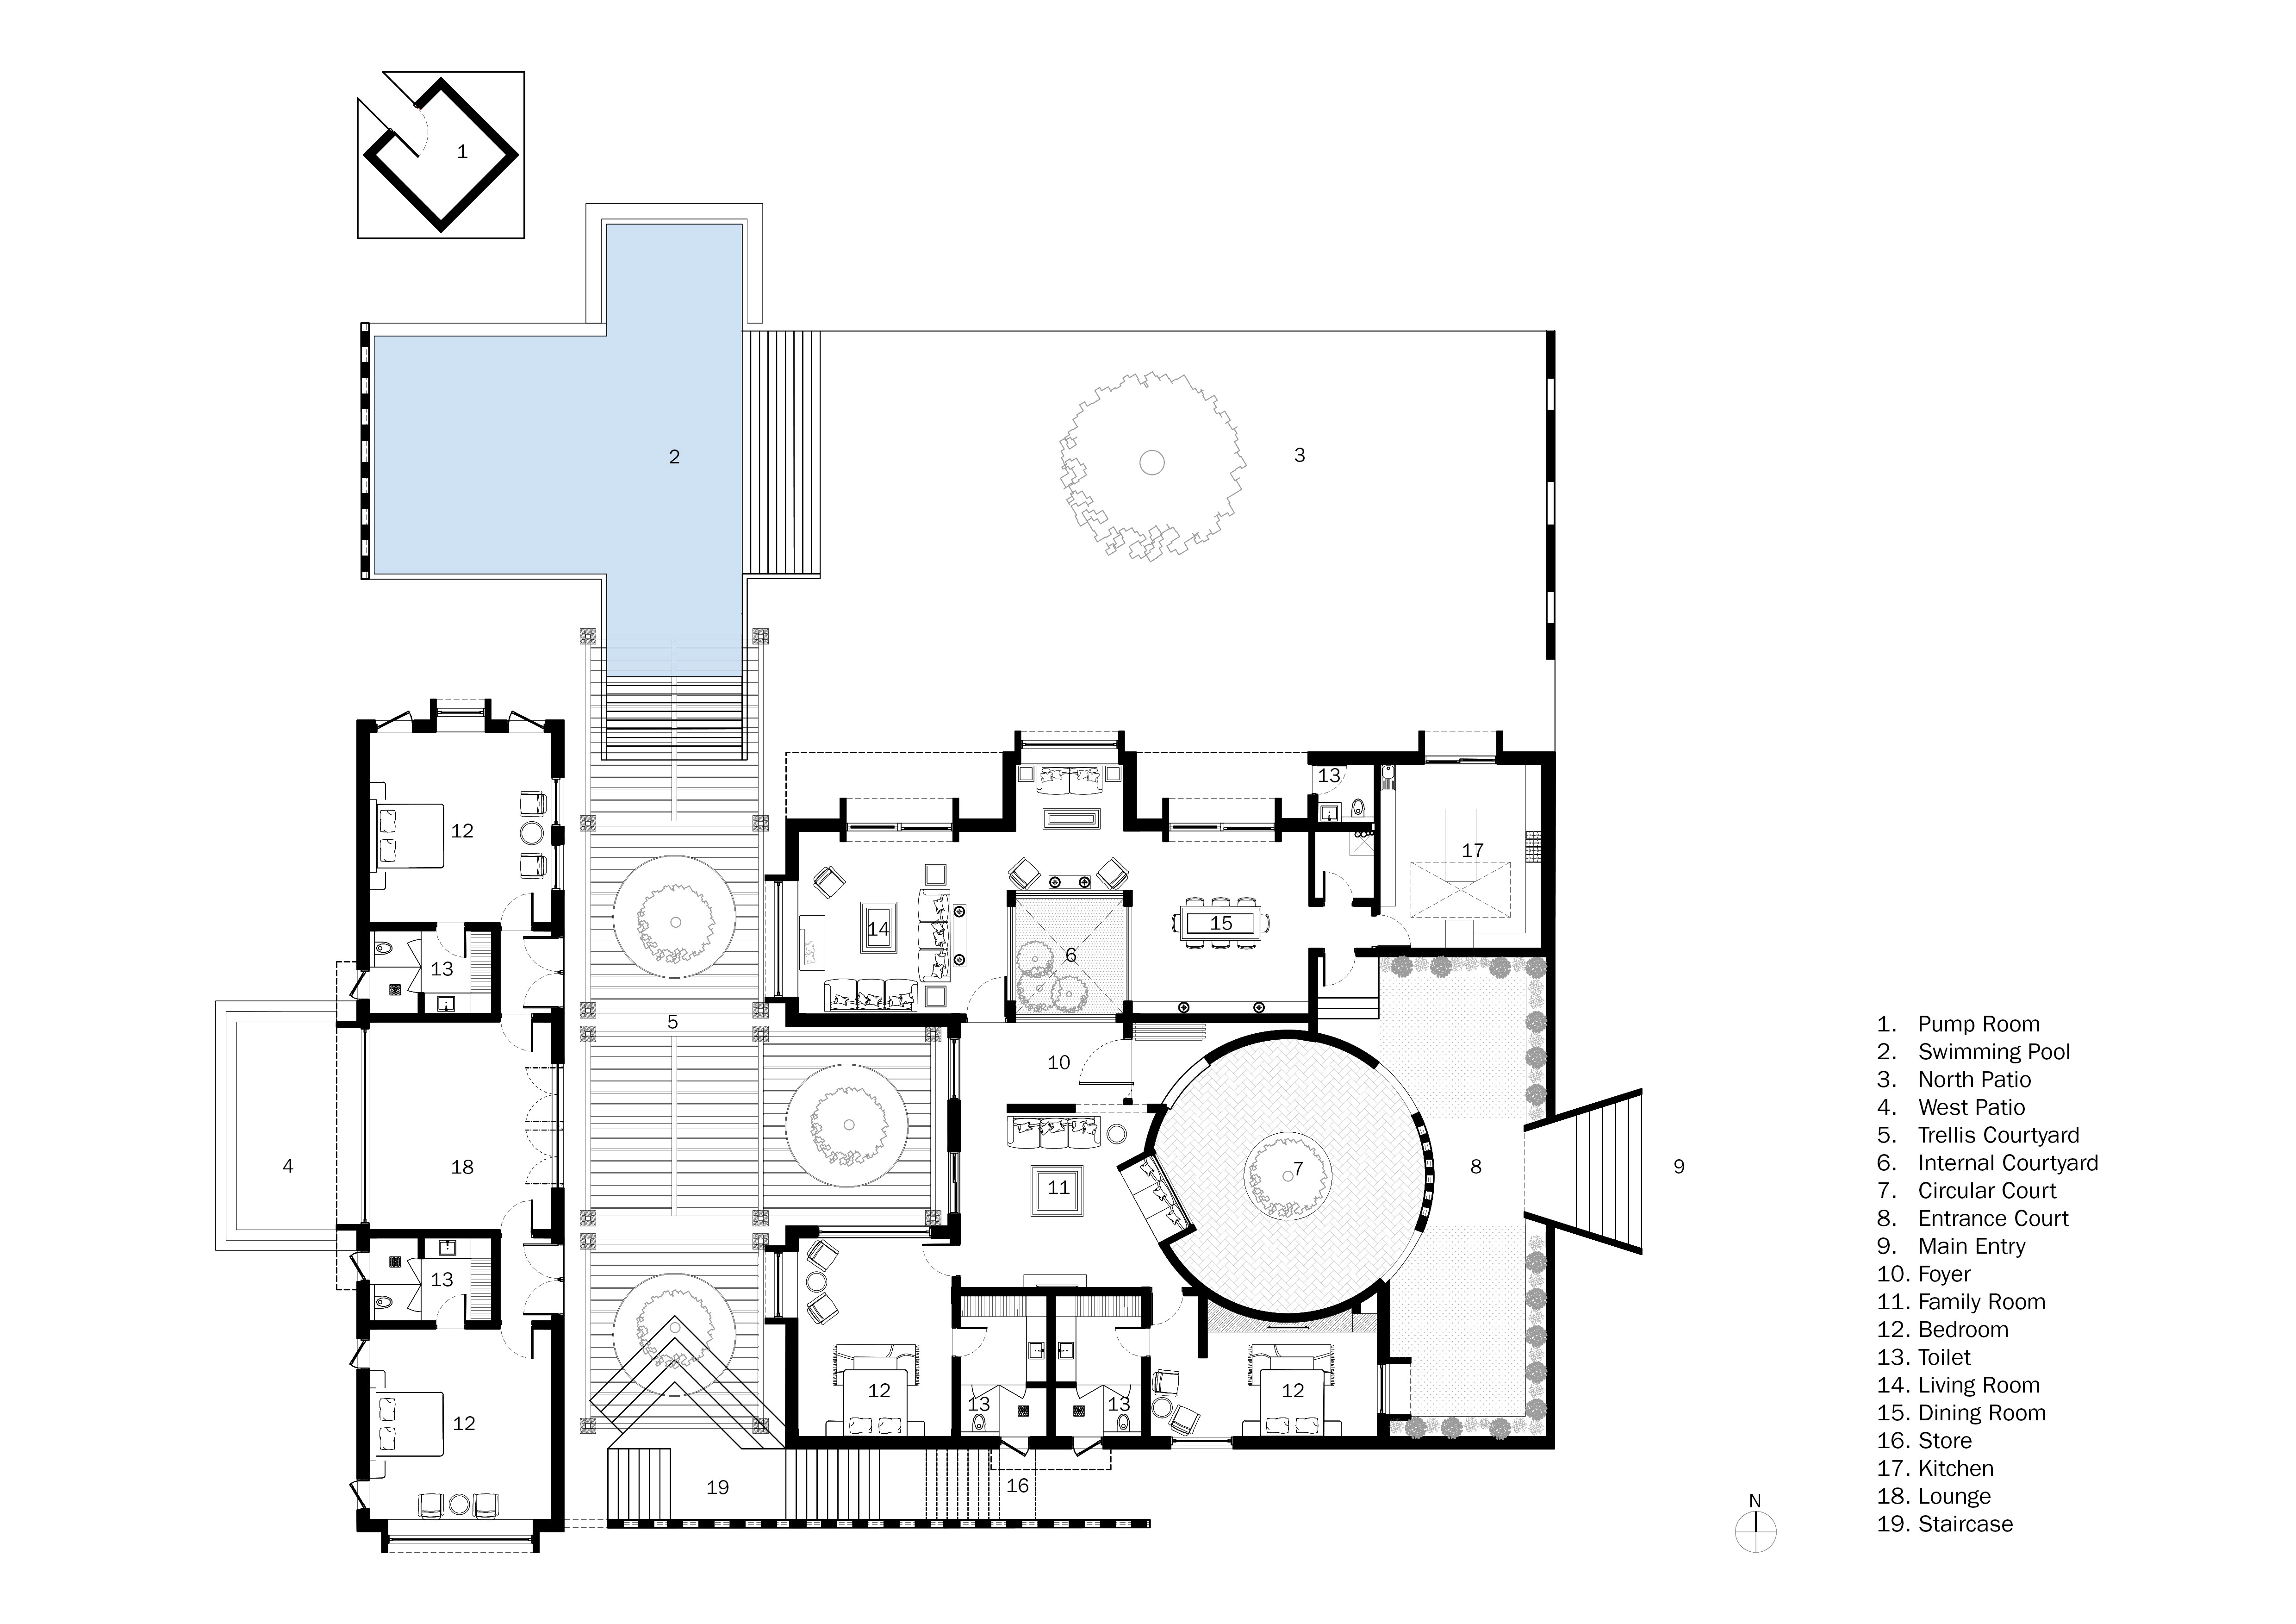 22-1611816401-02- Ground Floor Plan.jpg